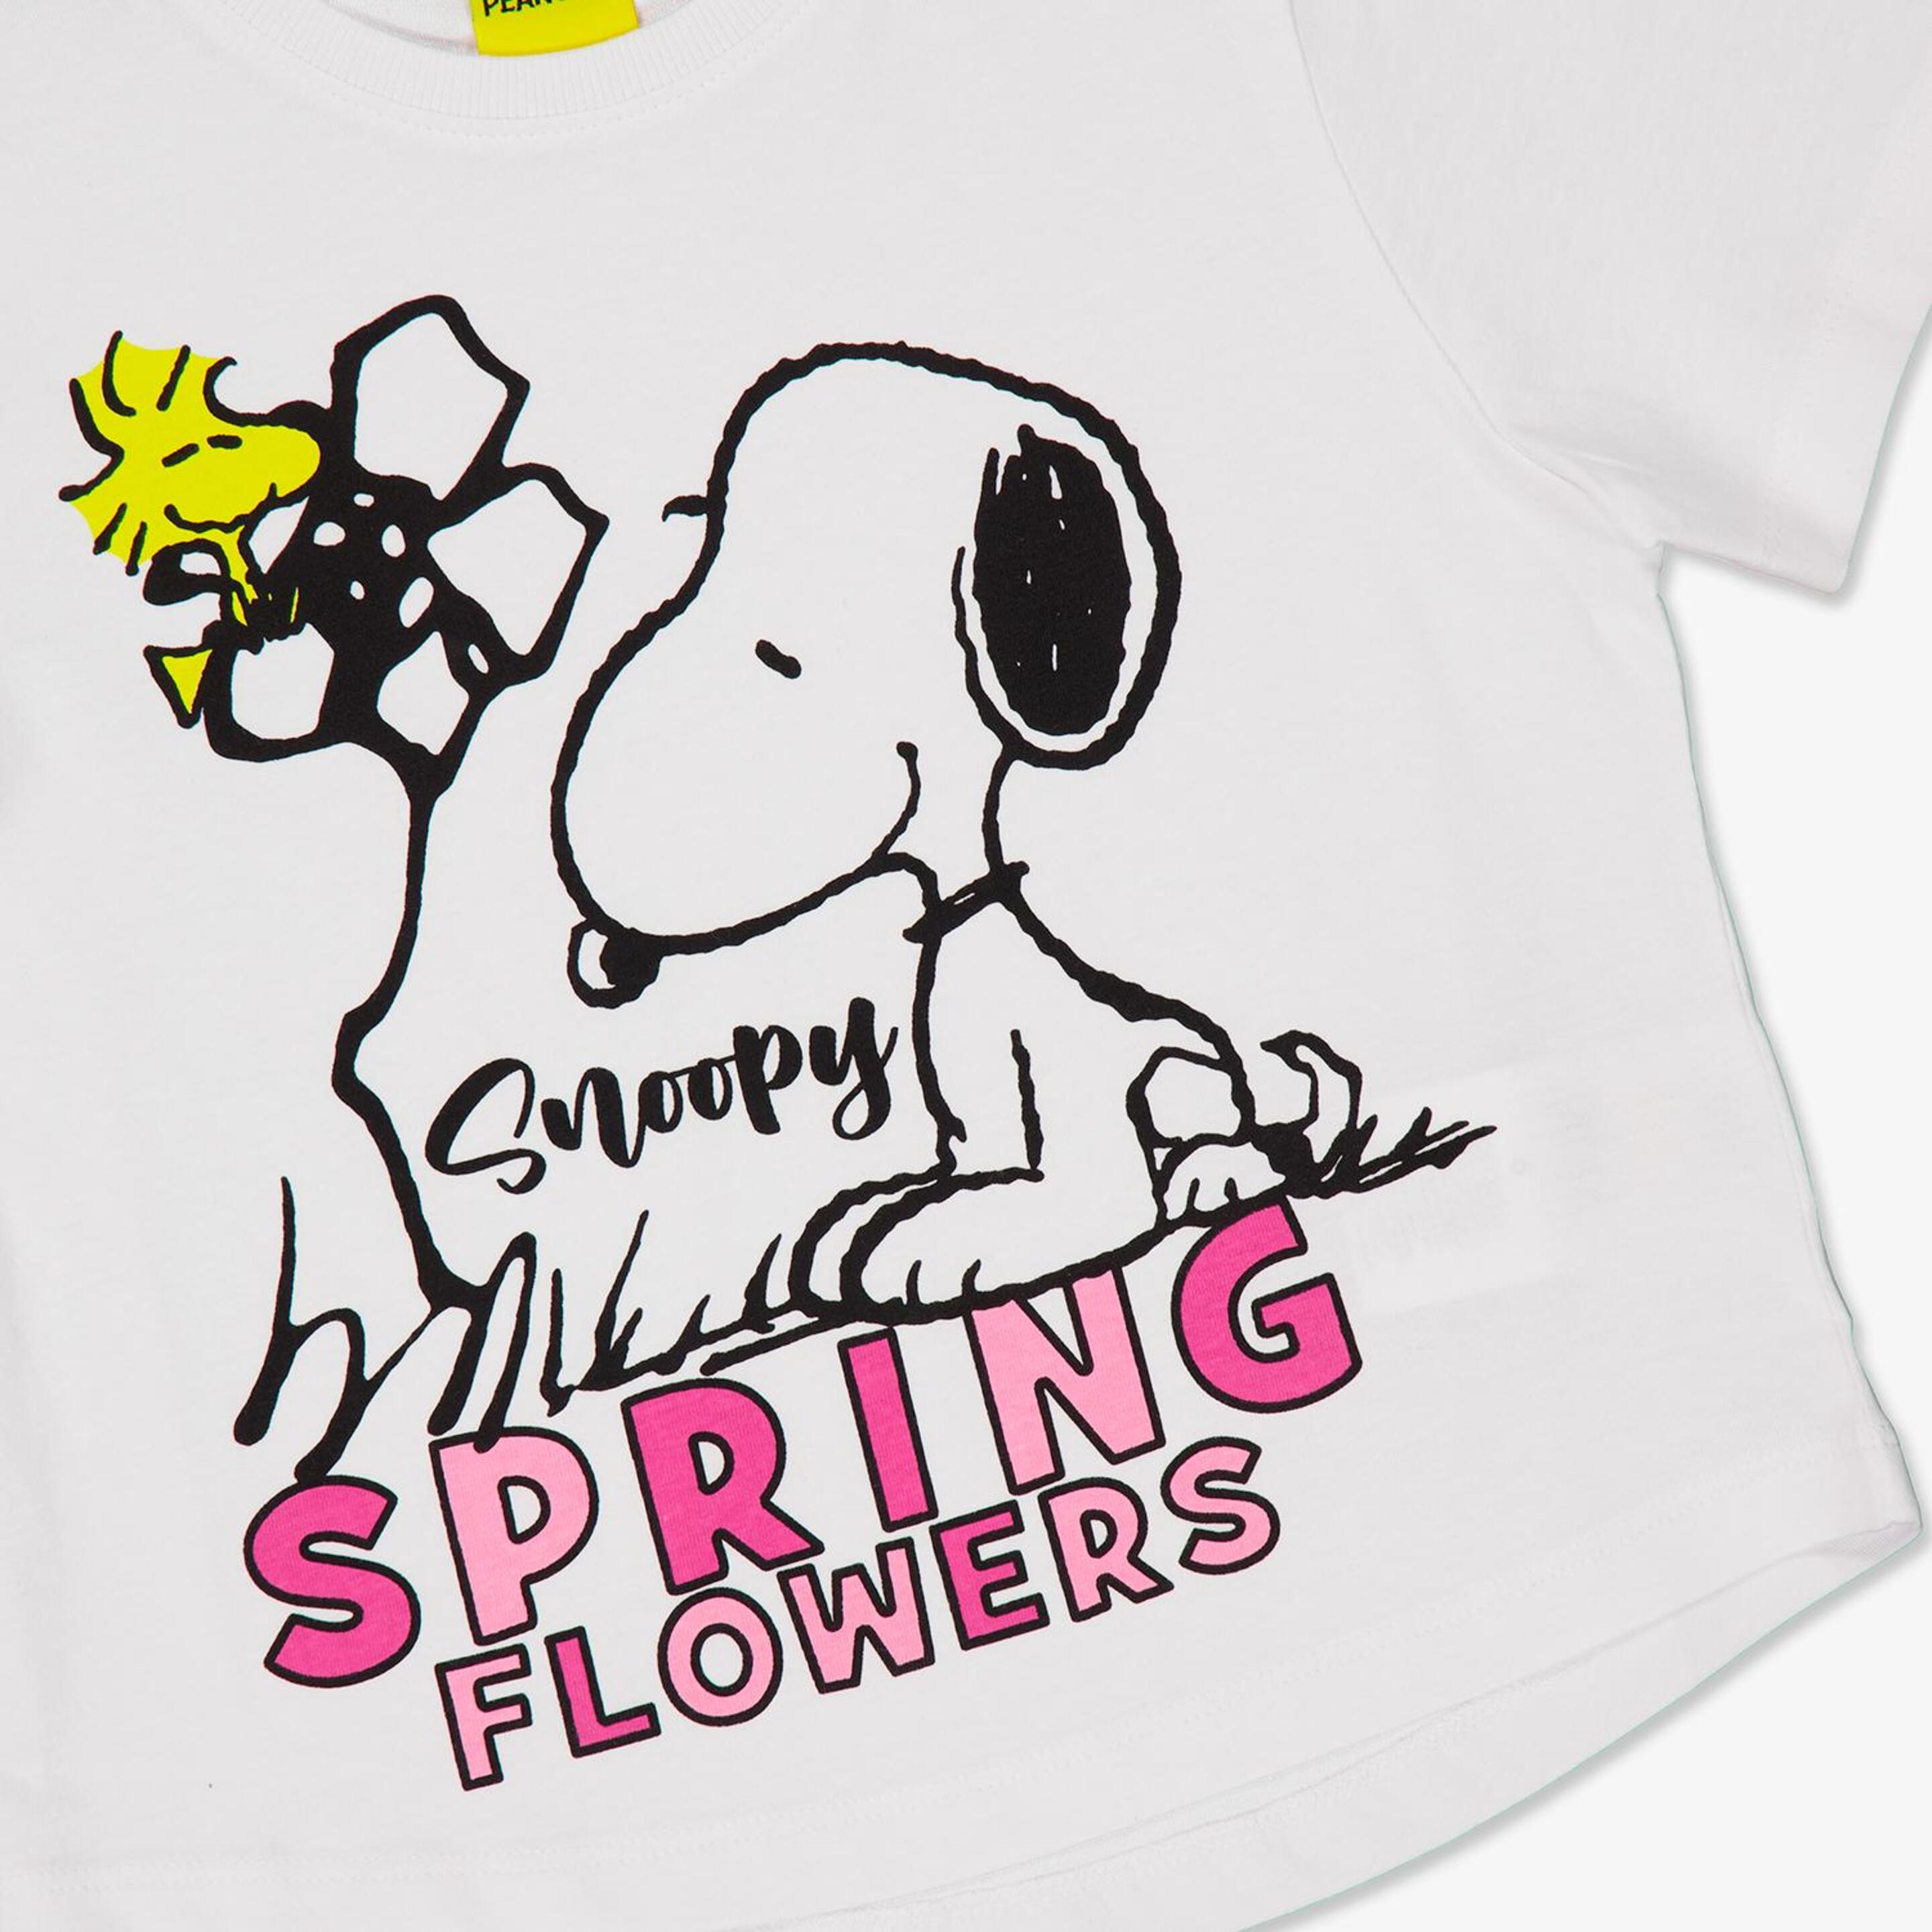 T-shirt Snoopy